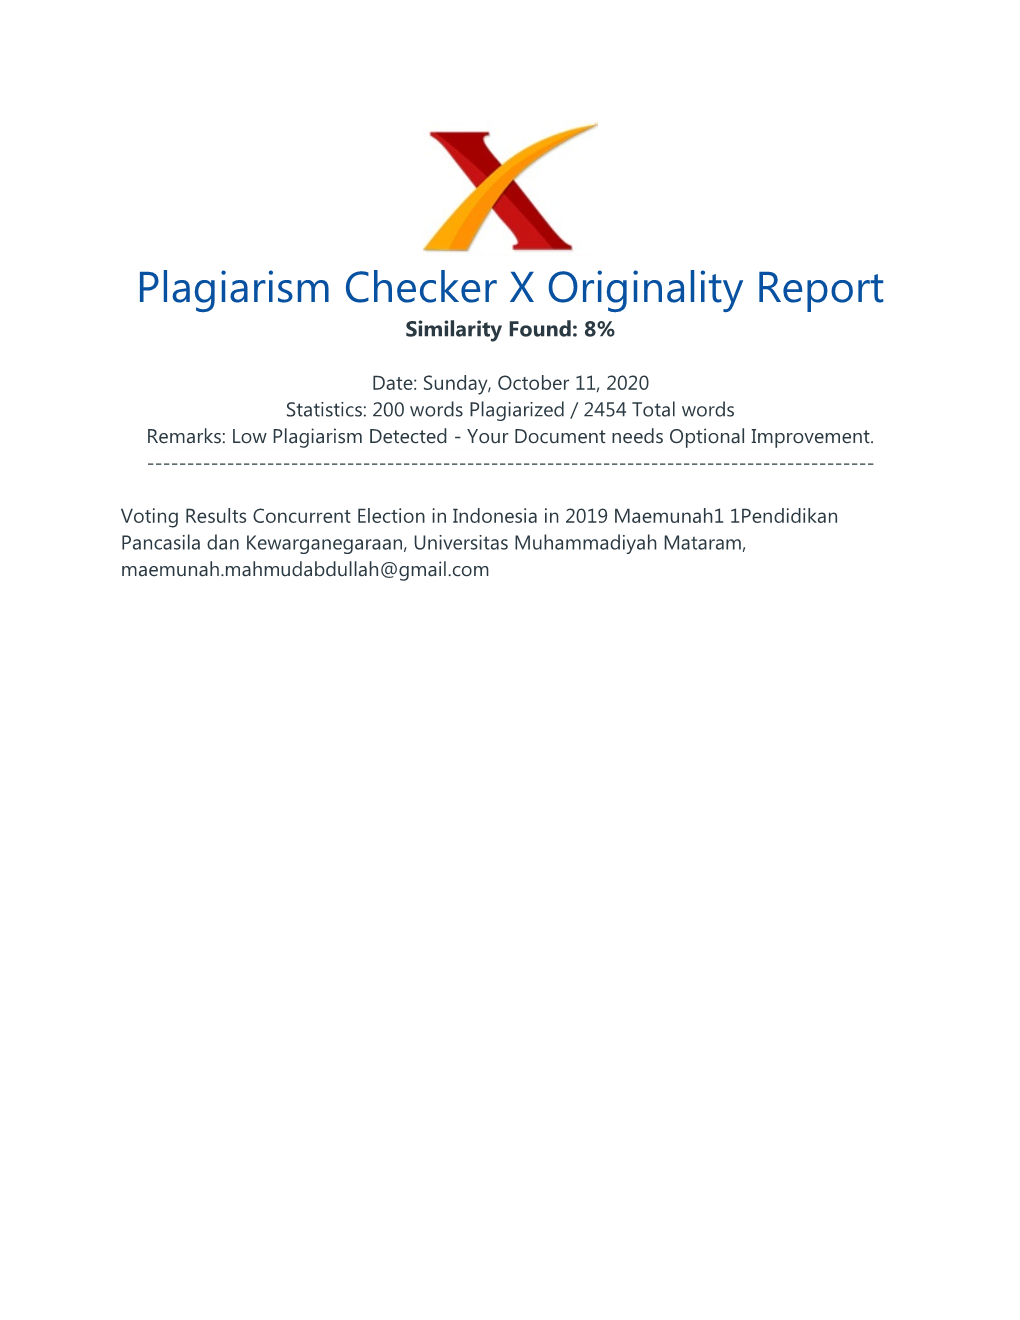 Plagiarism Checker X Originality Report Similarity Found: 8%